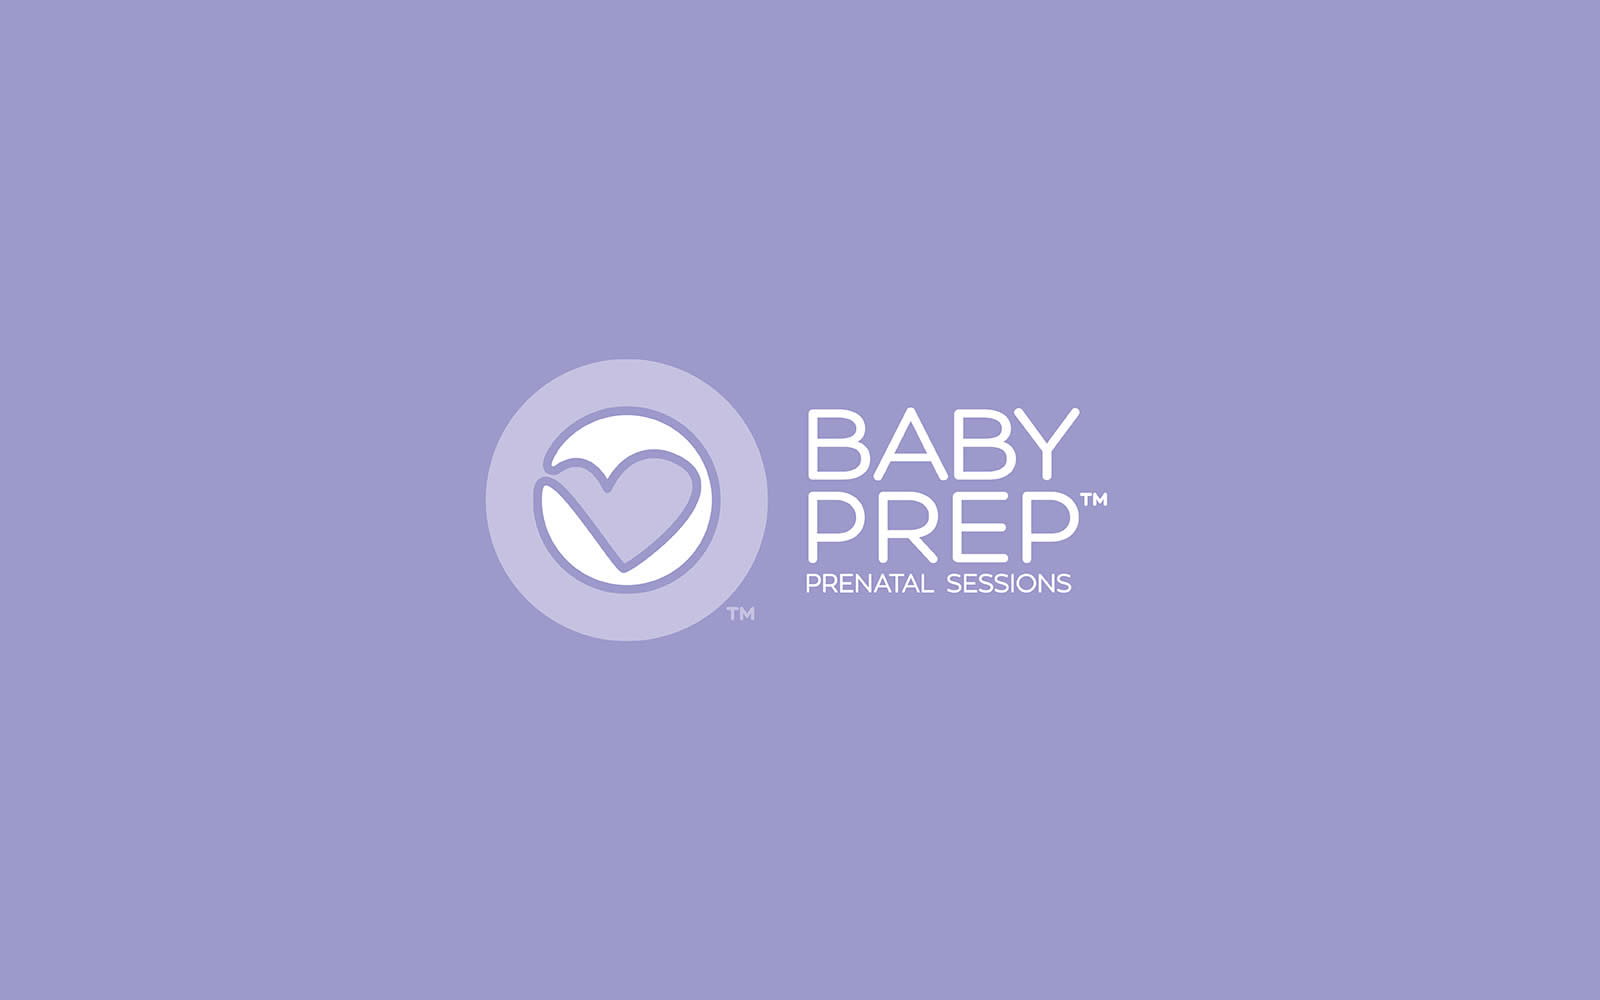 Baby Prep™ design.